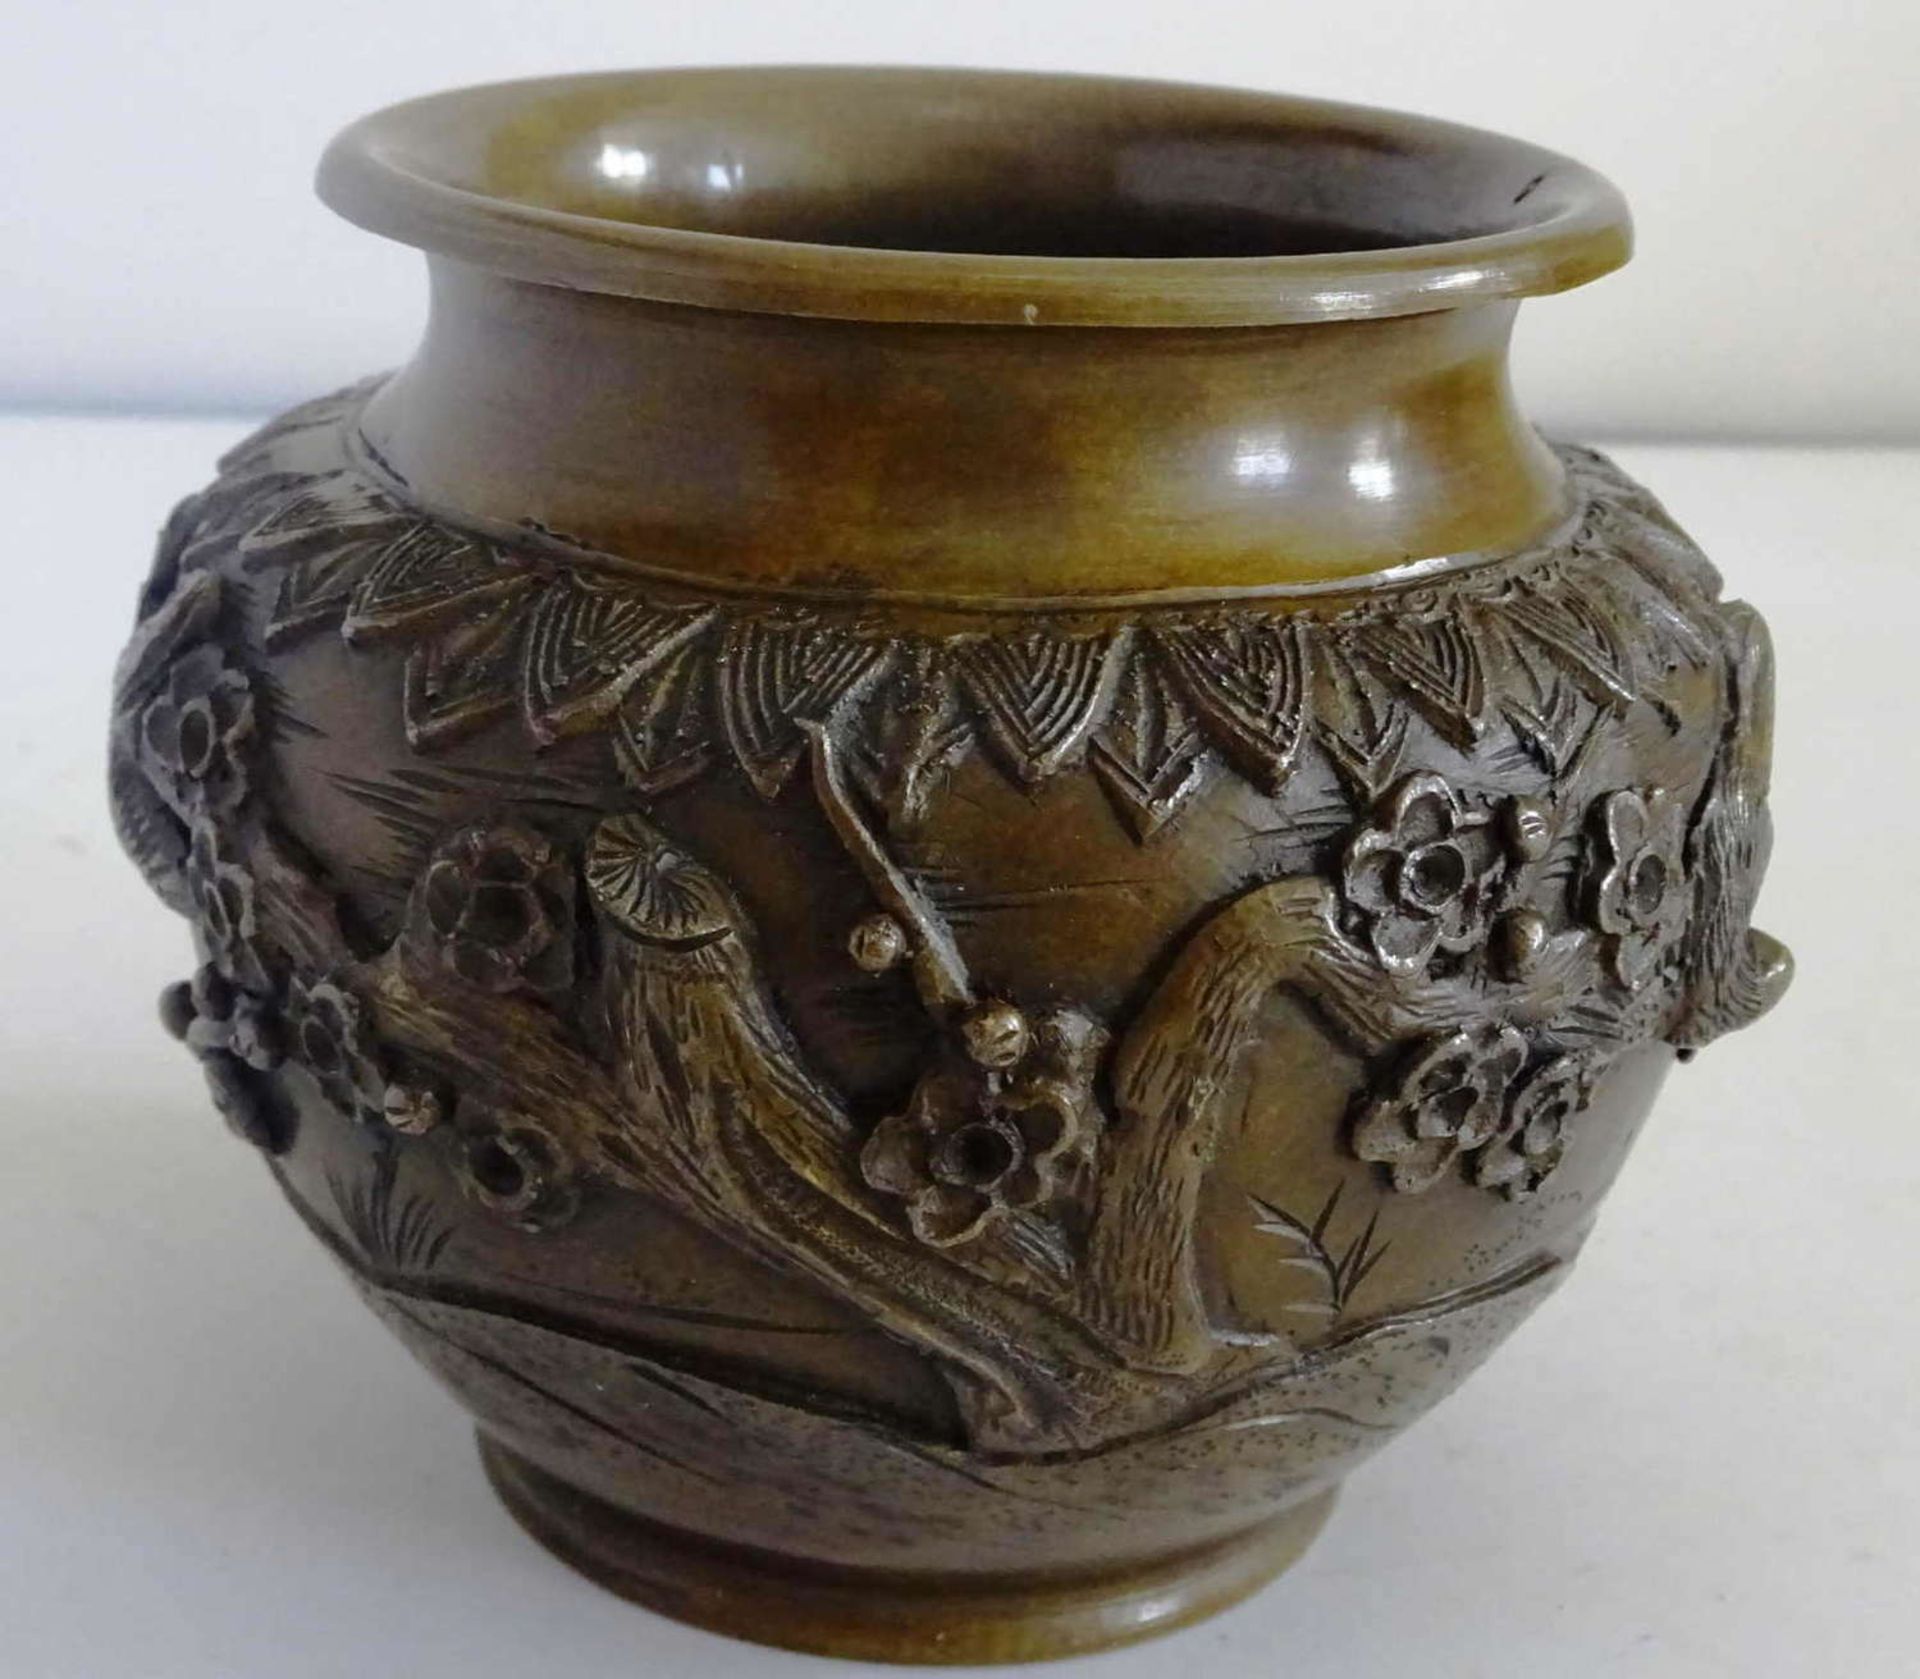 Bronze Topf "Japan" mit floralen Design, höhe ca. 9 cm, durchmesser ca. 8,5 cmBronze pot "Japan" - Image 2 of 2